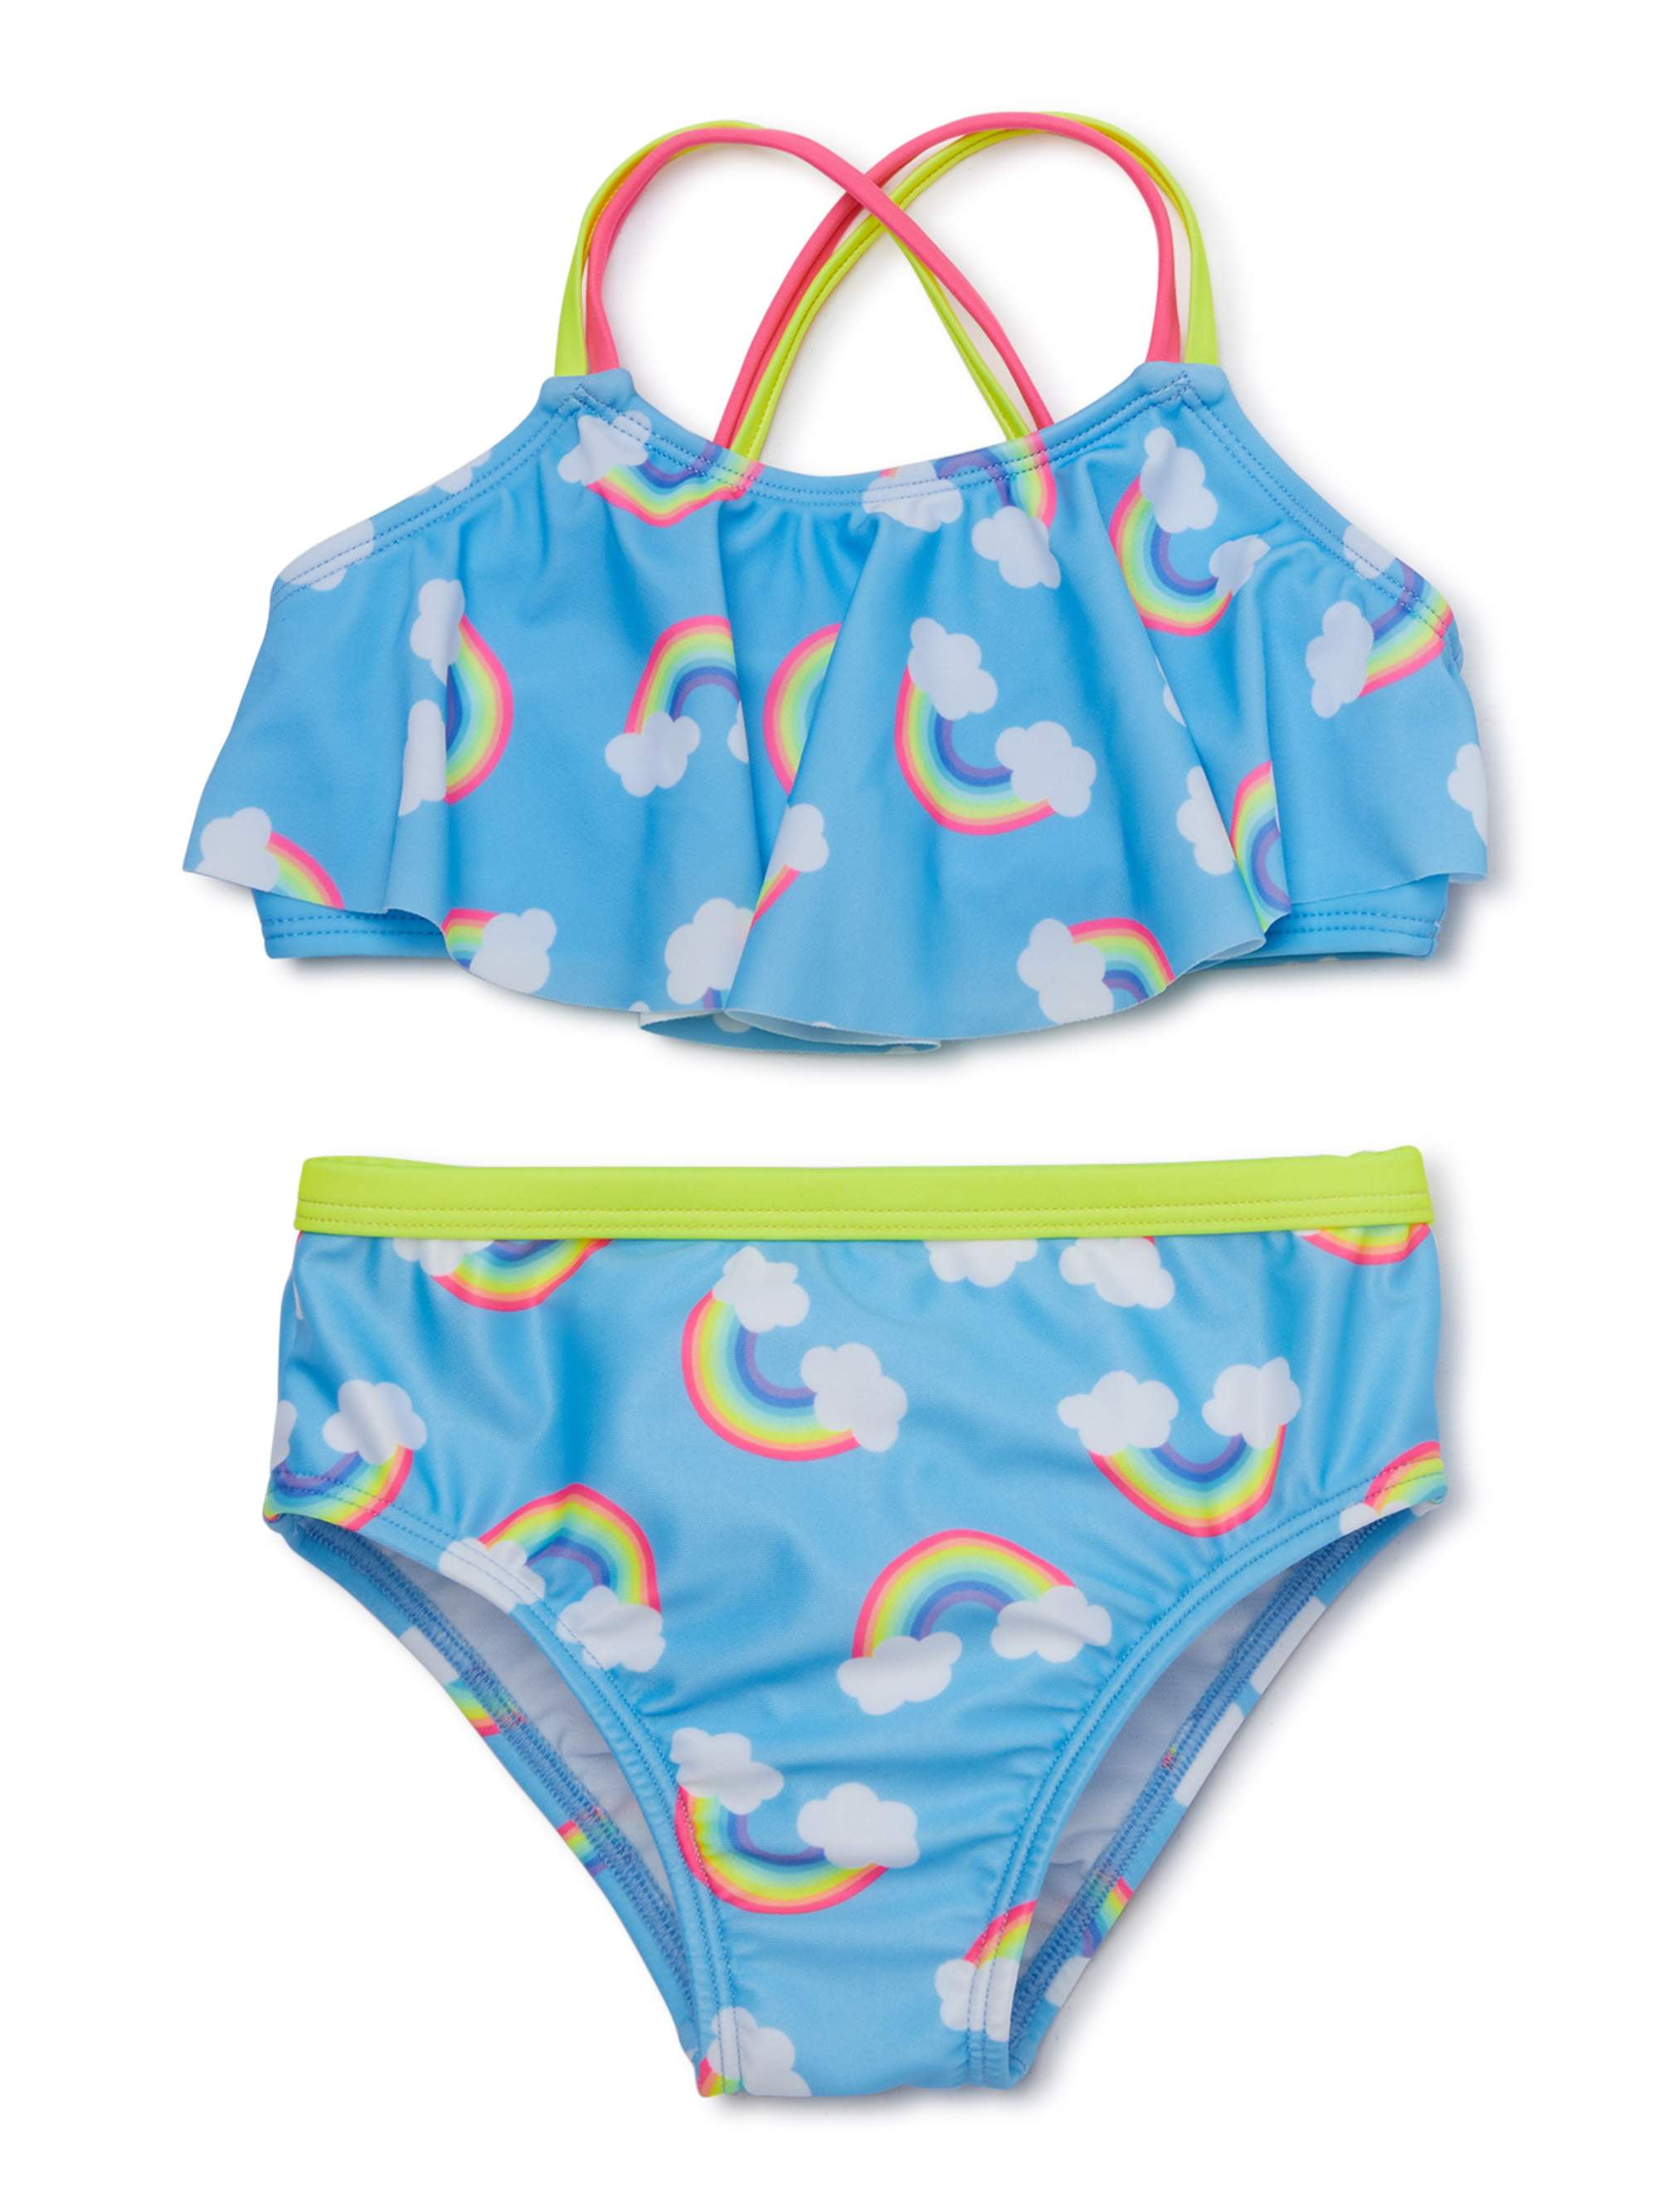 Wonder Nation Baby and Toddler Girls Rainbow Bikini, 2-Piece Swimsuit Set